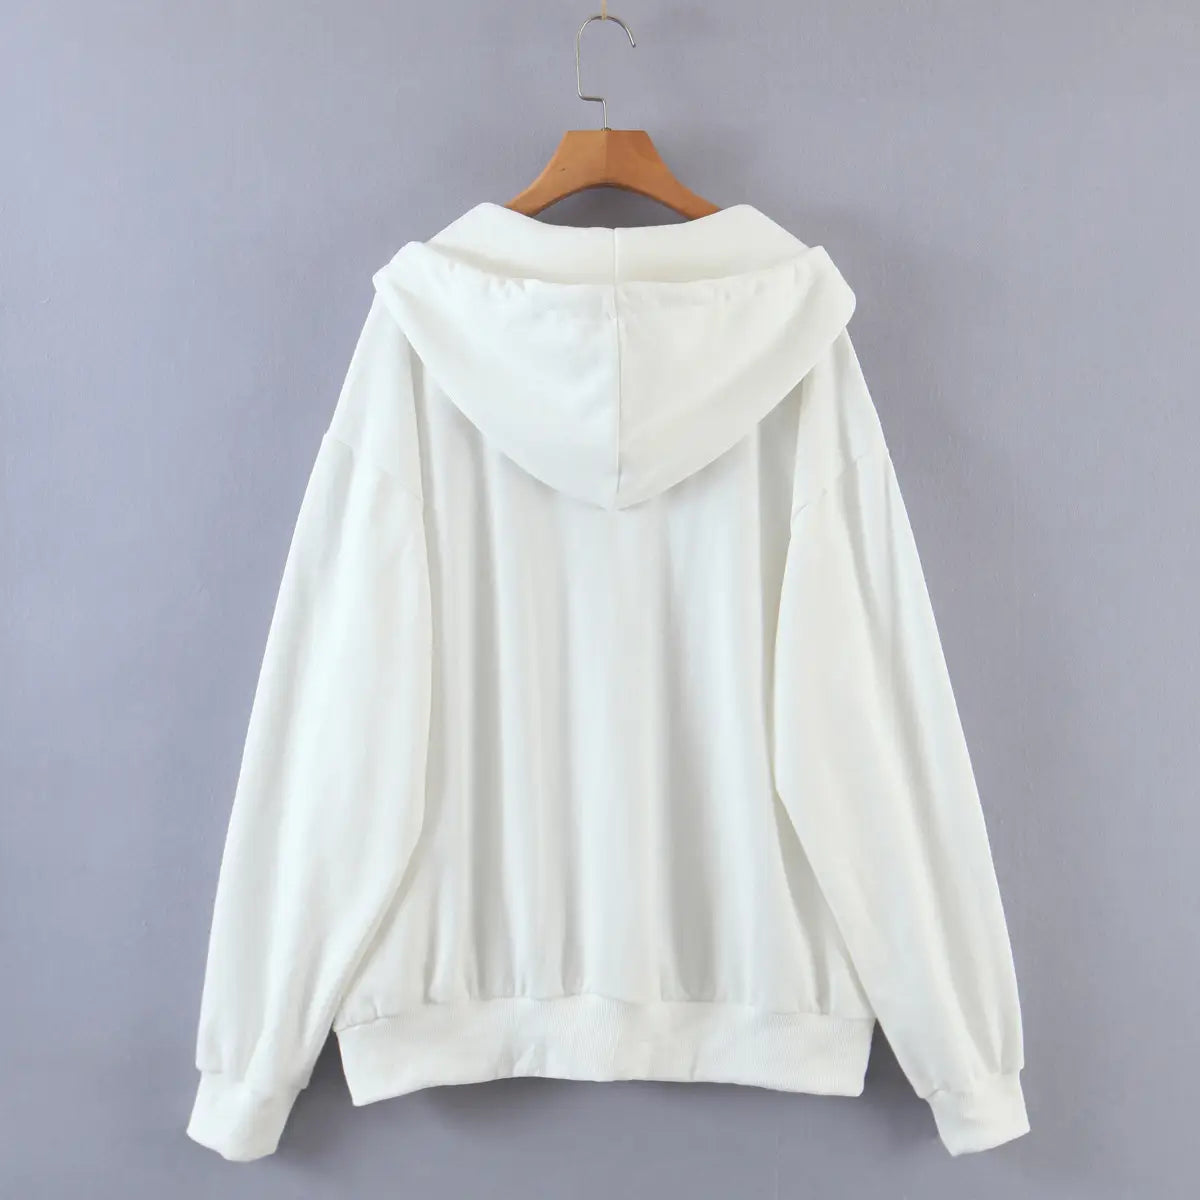 Lovemi - New Hooded Loose Women’s Sweater Sweater